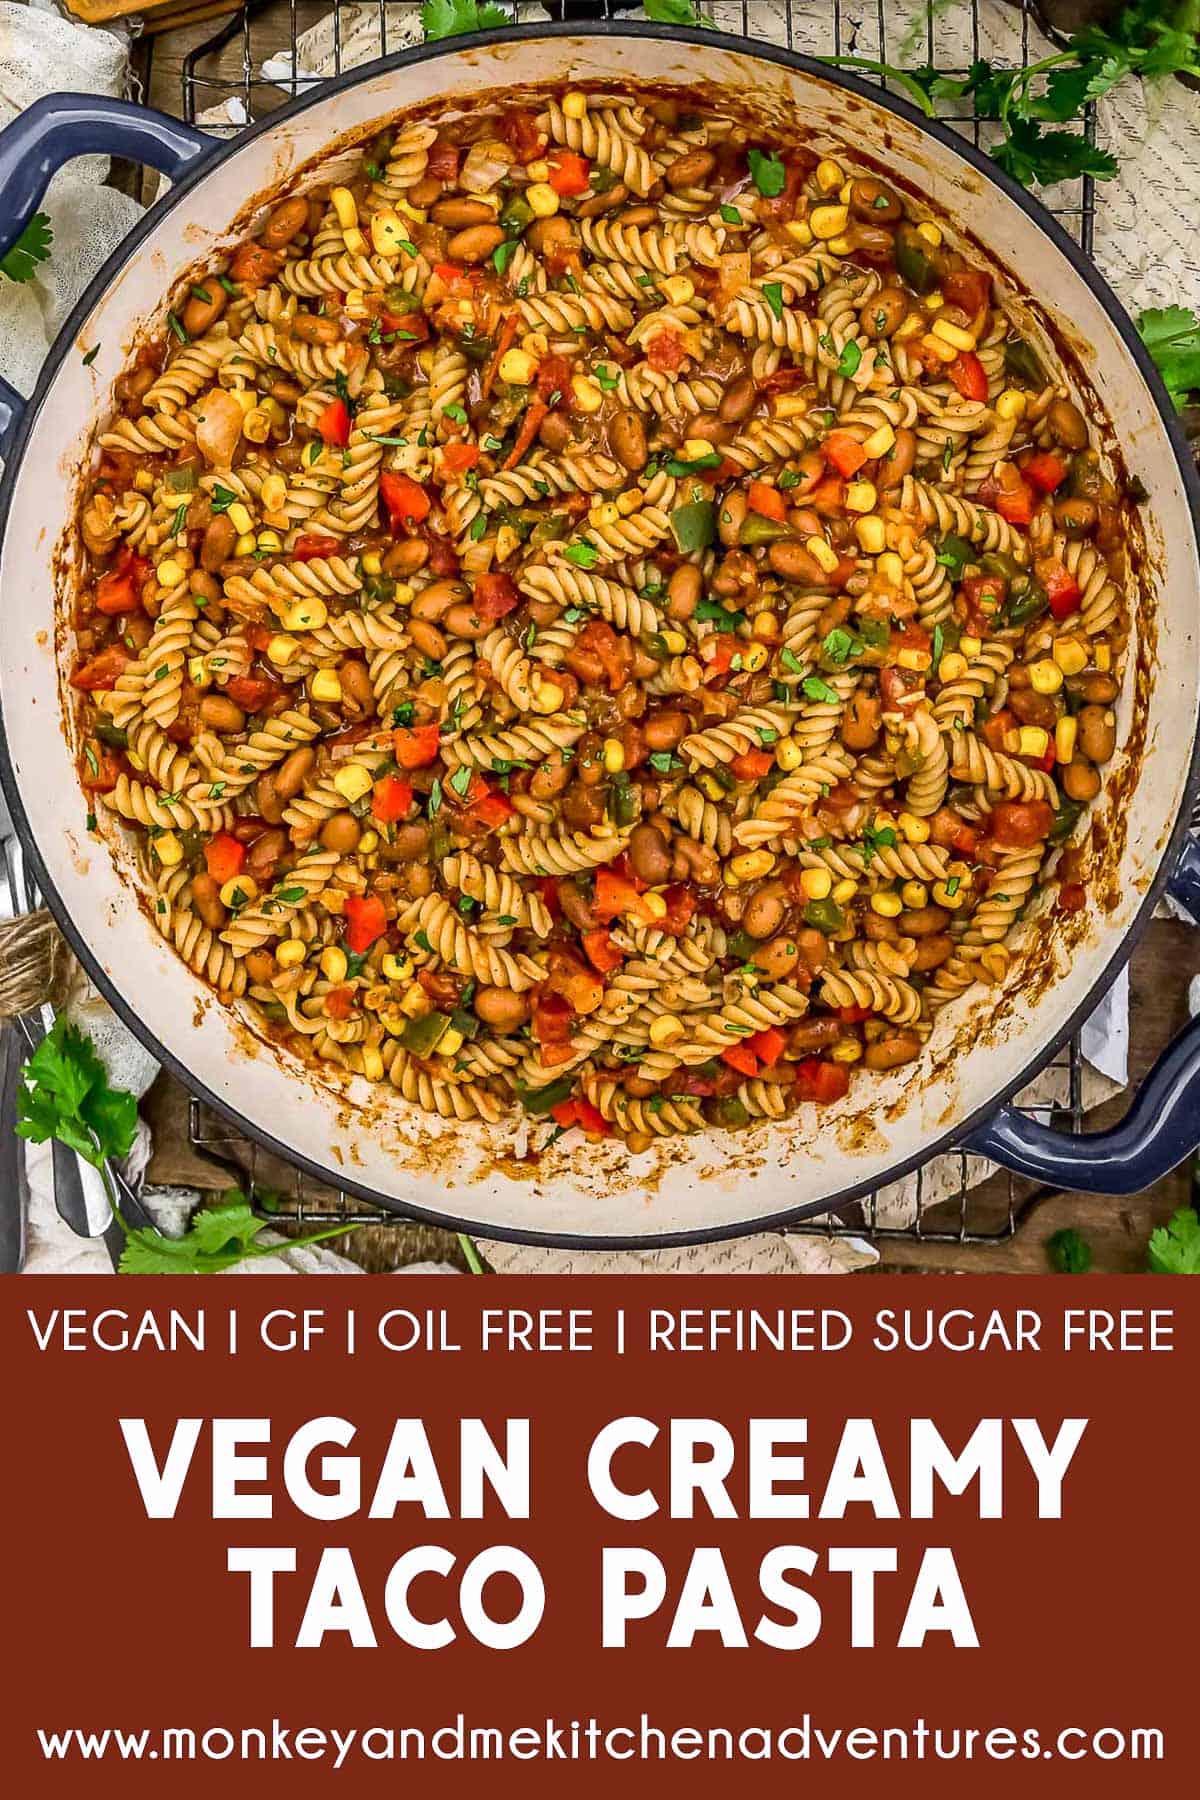 Vegan Creamy Taco Pasta with text description